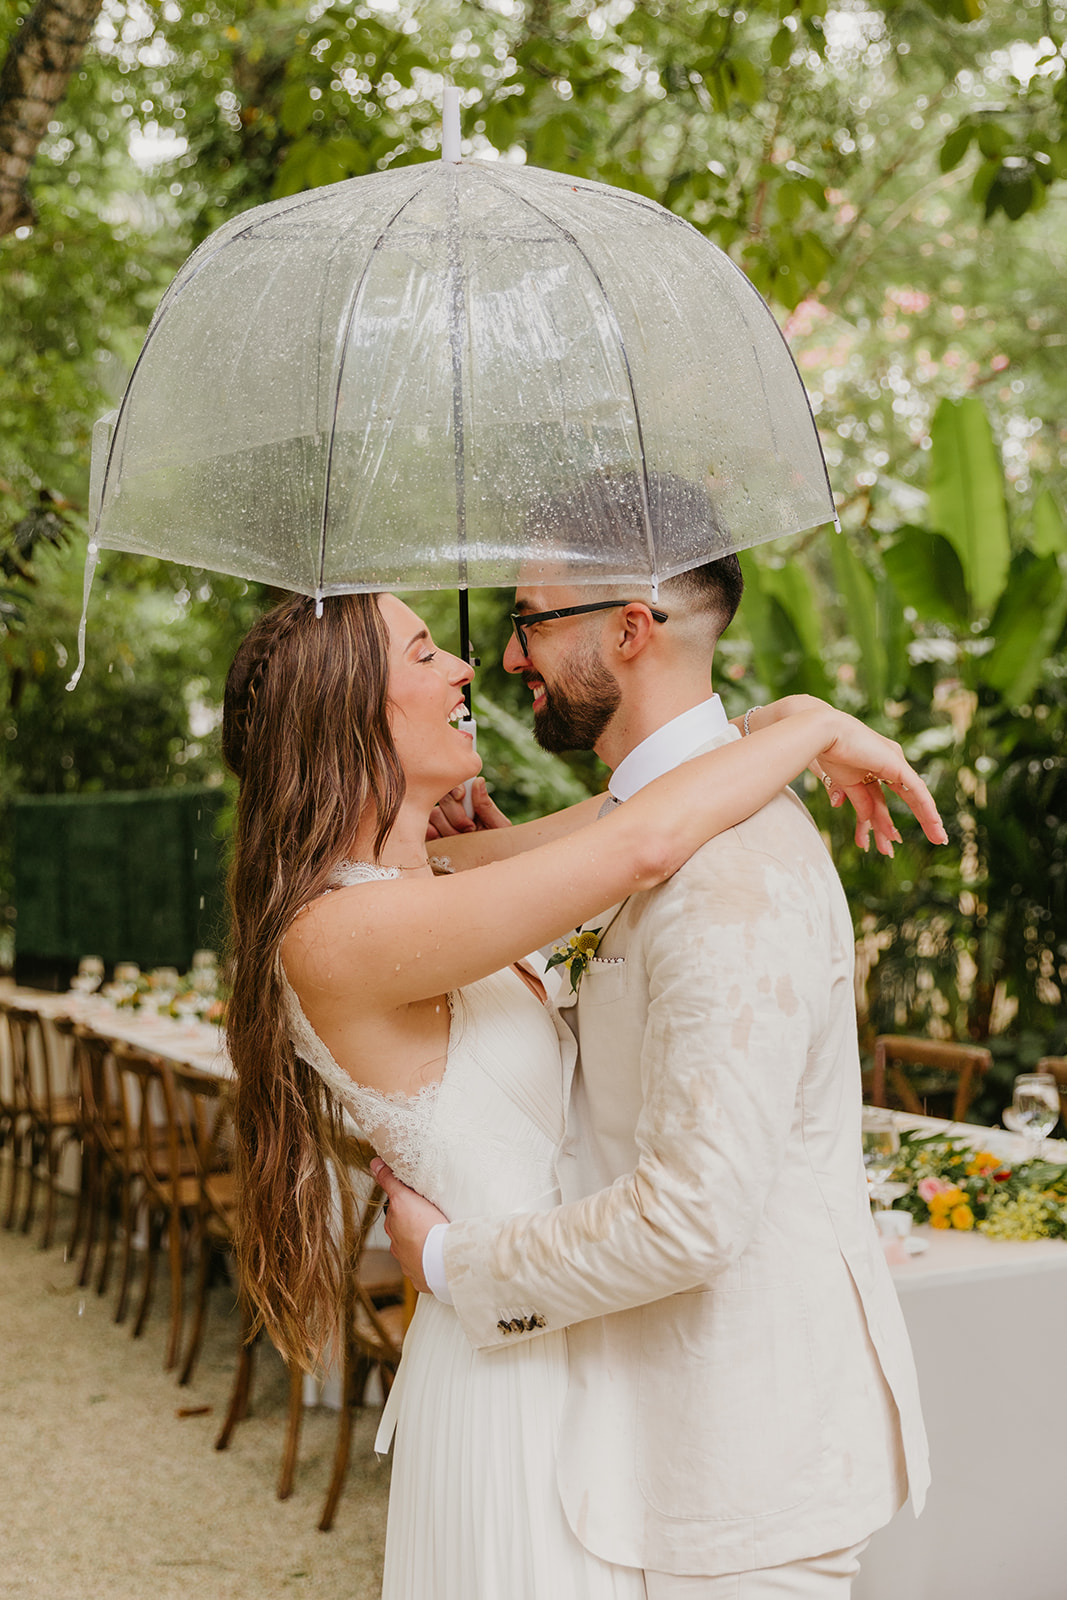 Rainy Day Bride and Groom Garden Wedding